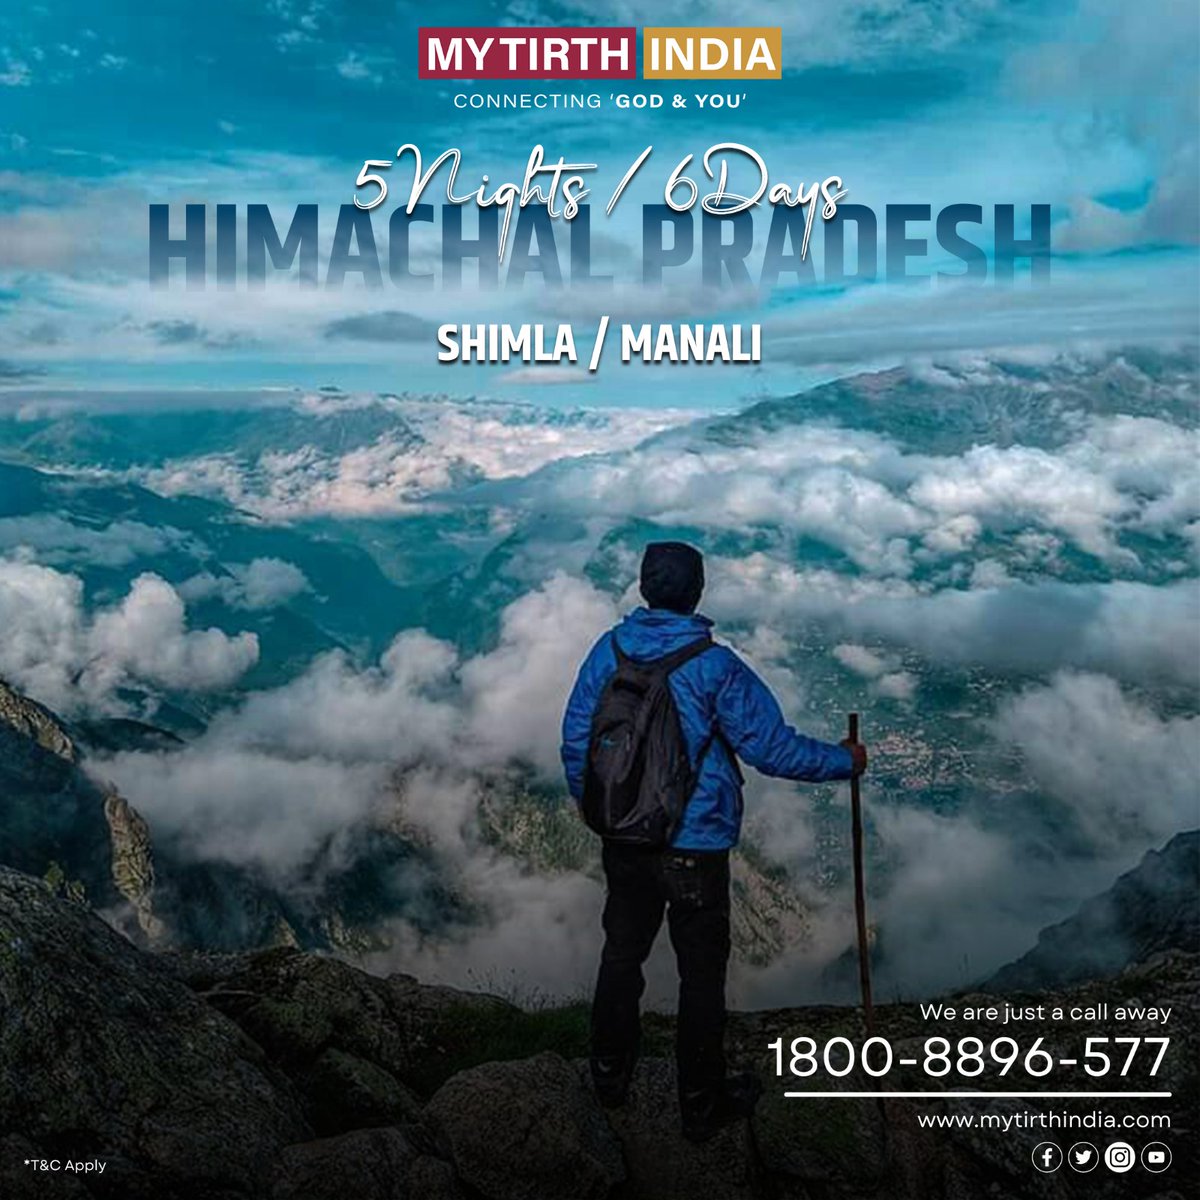 Explore Himachal Pradesh Book Now #mytirthindia #india #himachalpradesh #himachal #india #himalayas #shimla #mountains #manali #himachaltourism #travel #himachali #nature #travelphotography #incredibleindia #himachaldiaries #instahimachal #kullu #pahadi #photography #travelgram